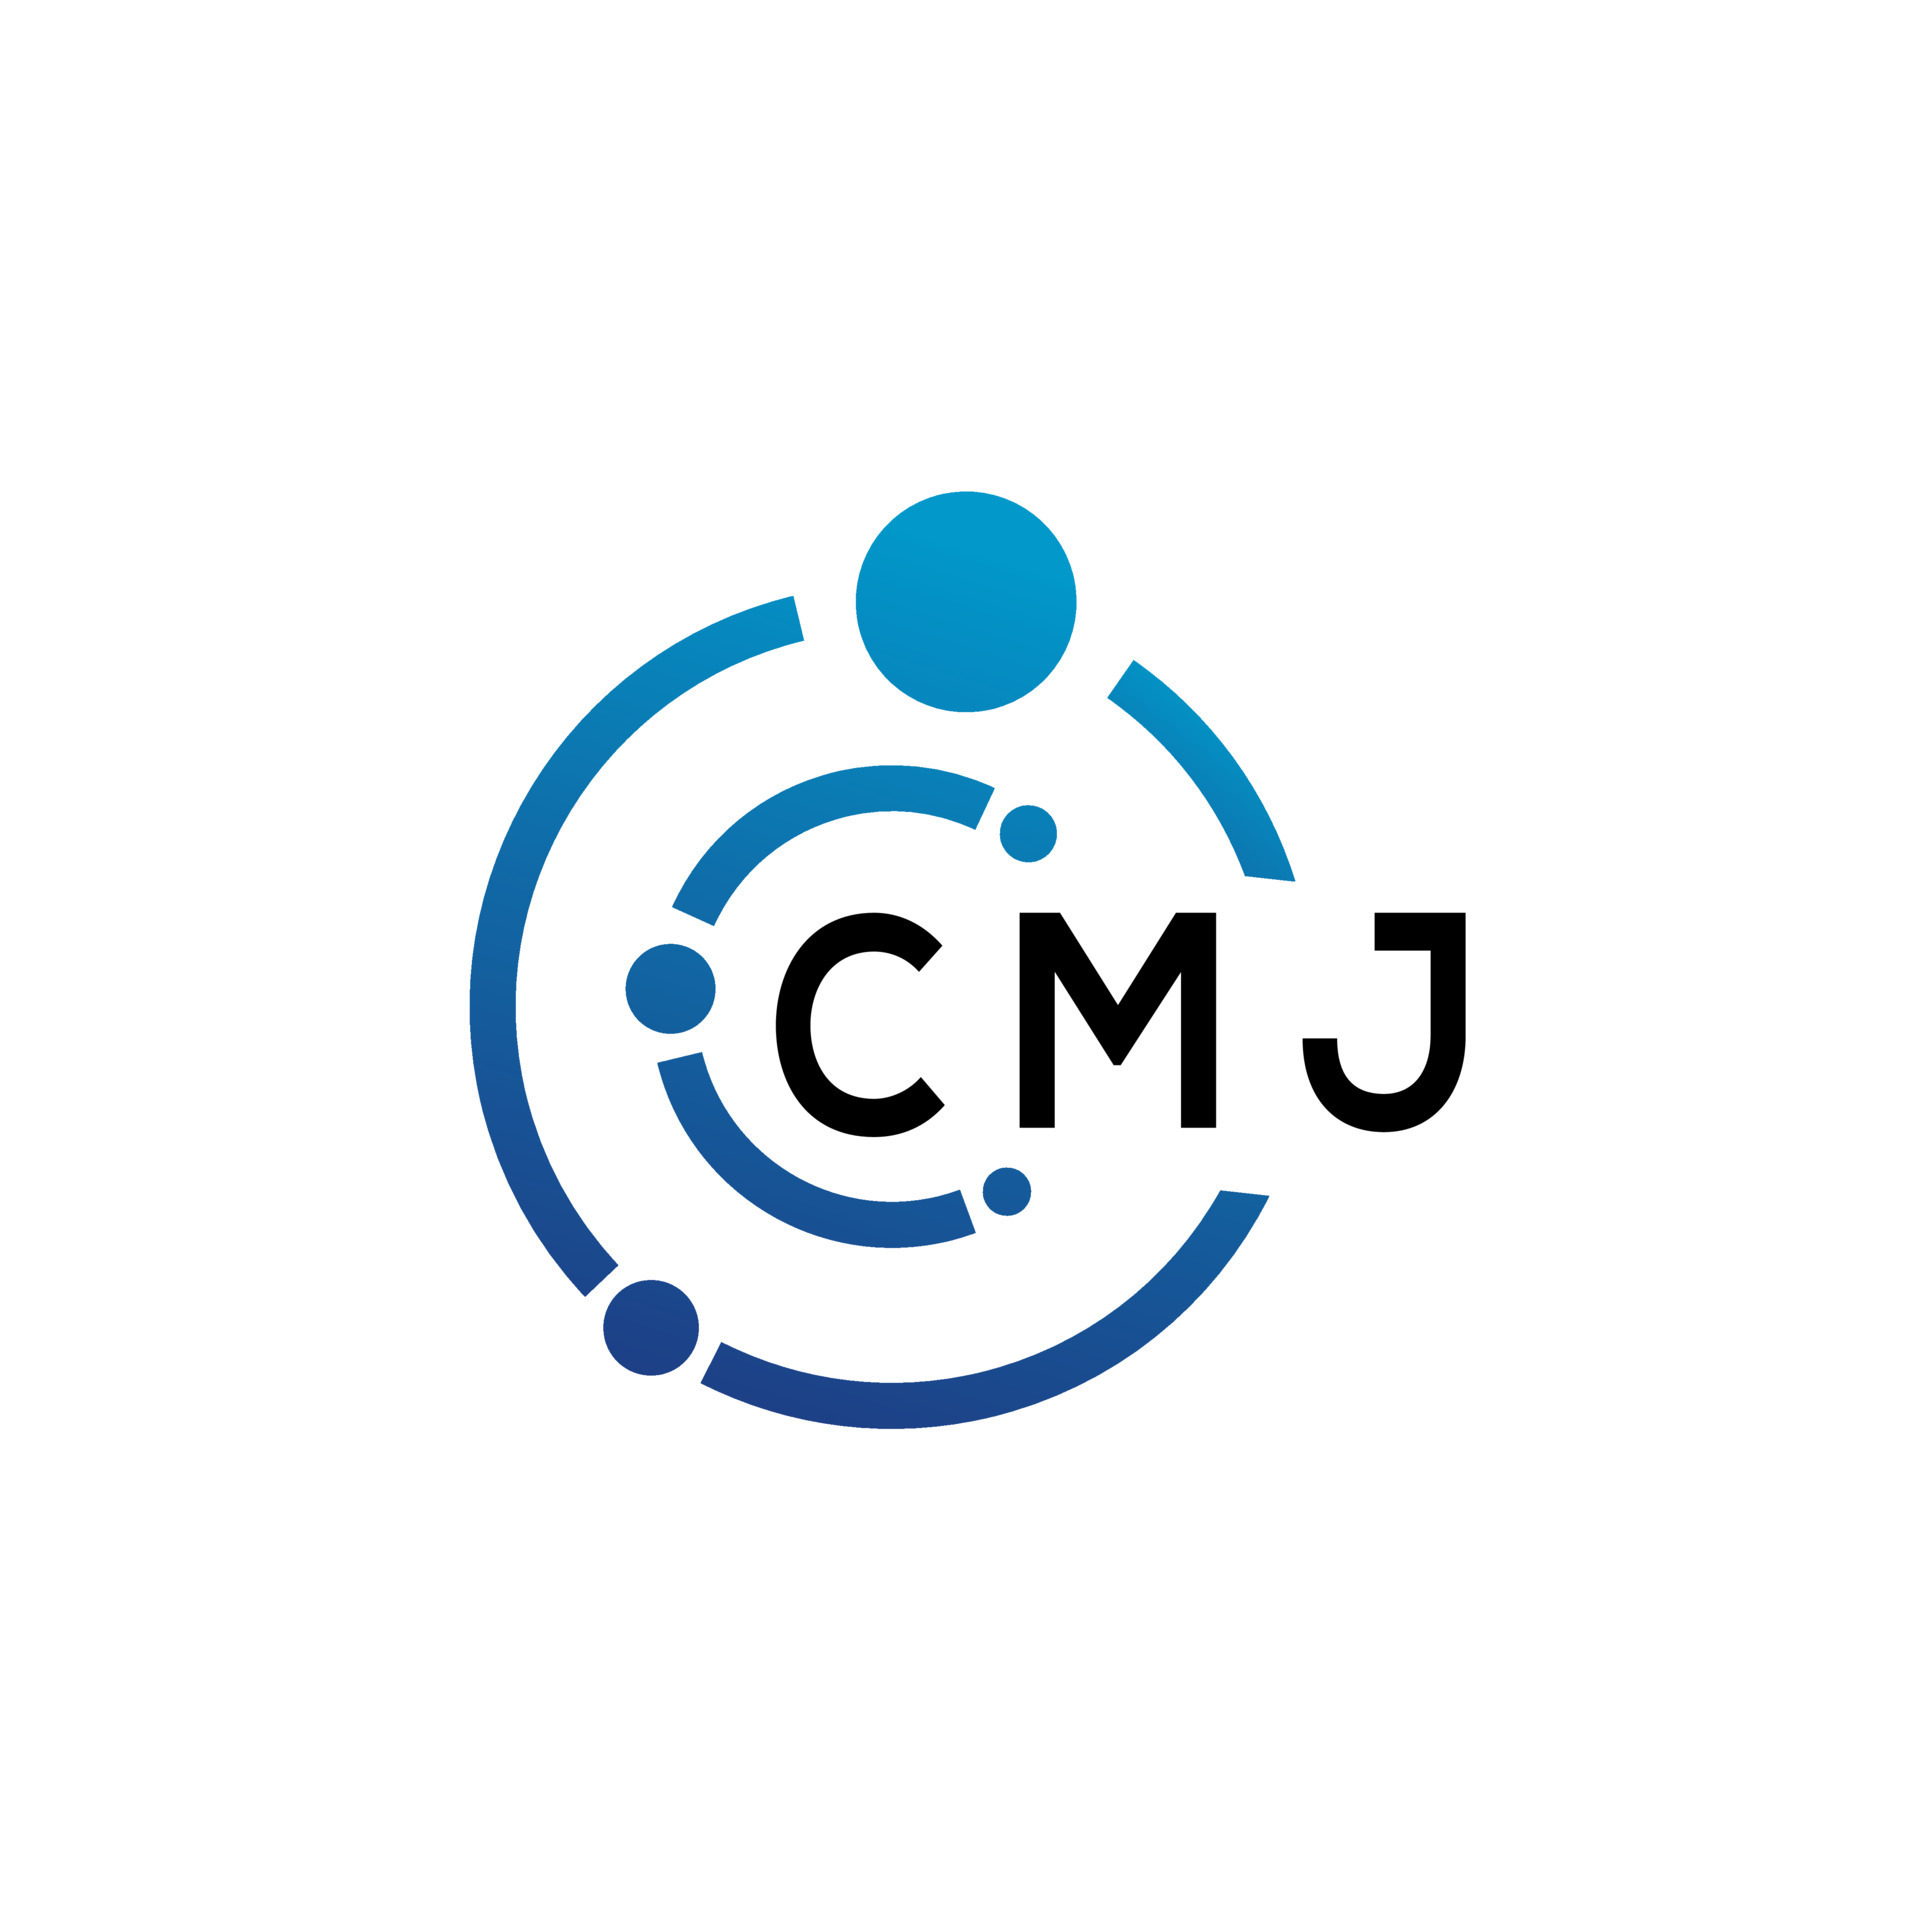 CMJ letter logo design on white background. CMJ creative initials ...